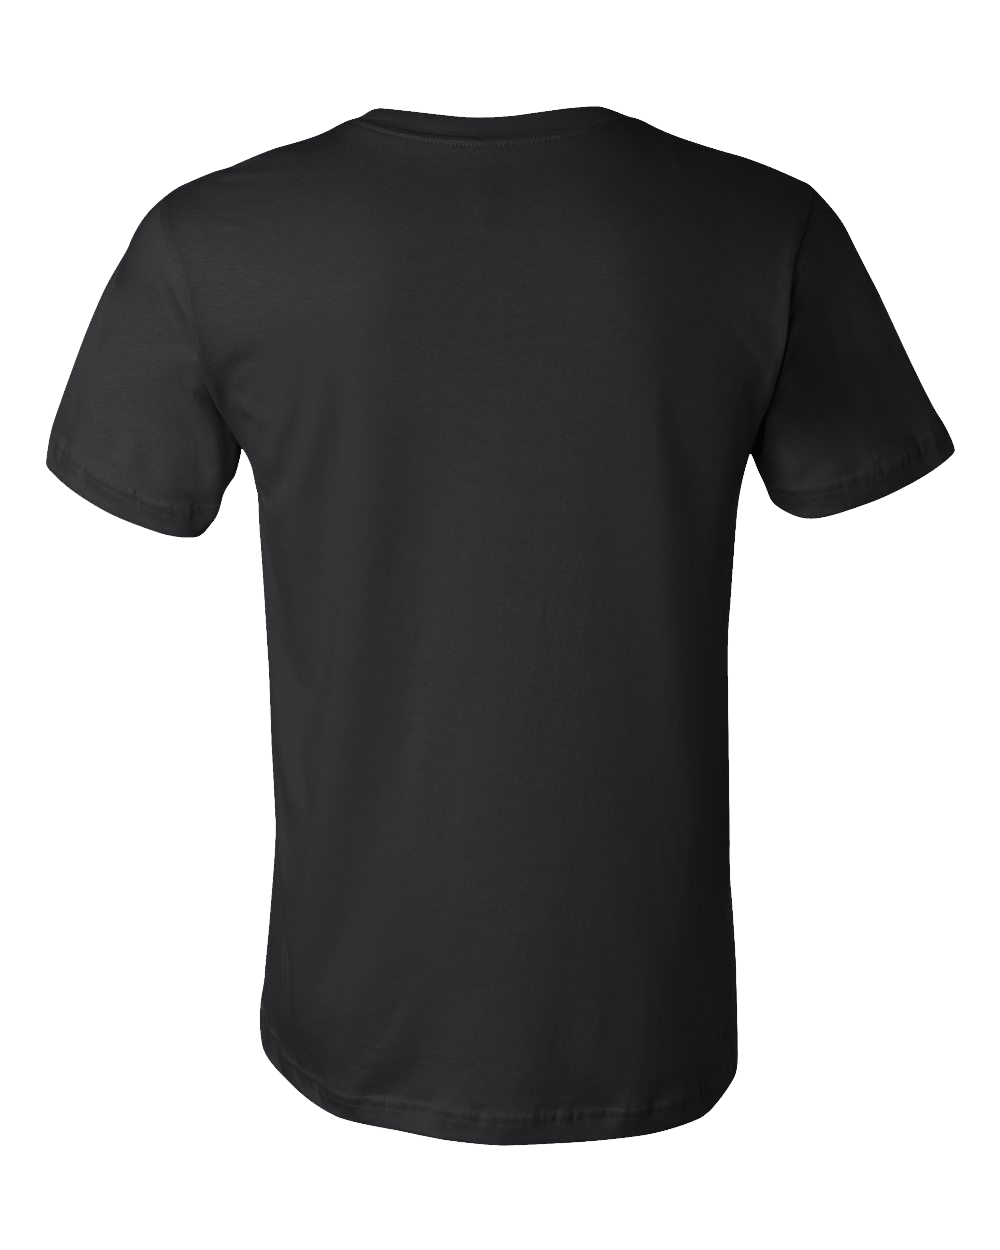 Standard Black Aspen Hill, MD | Retro, Vintage Style Maryland Pride  T-shirt